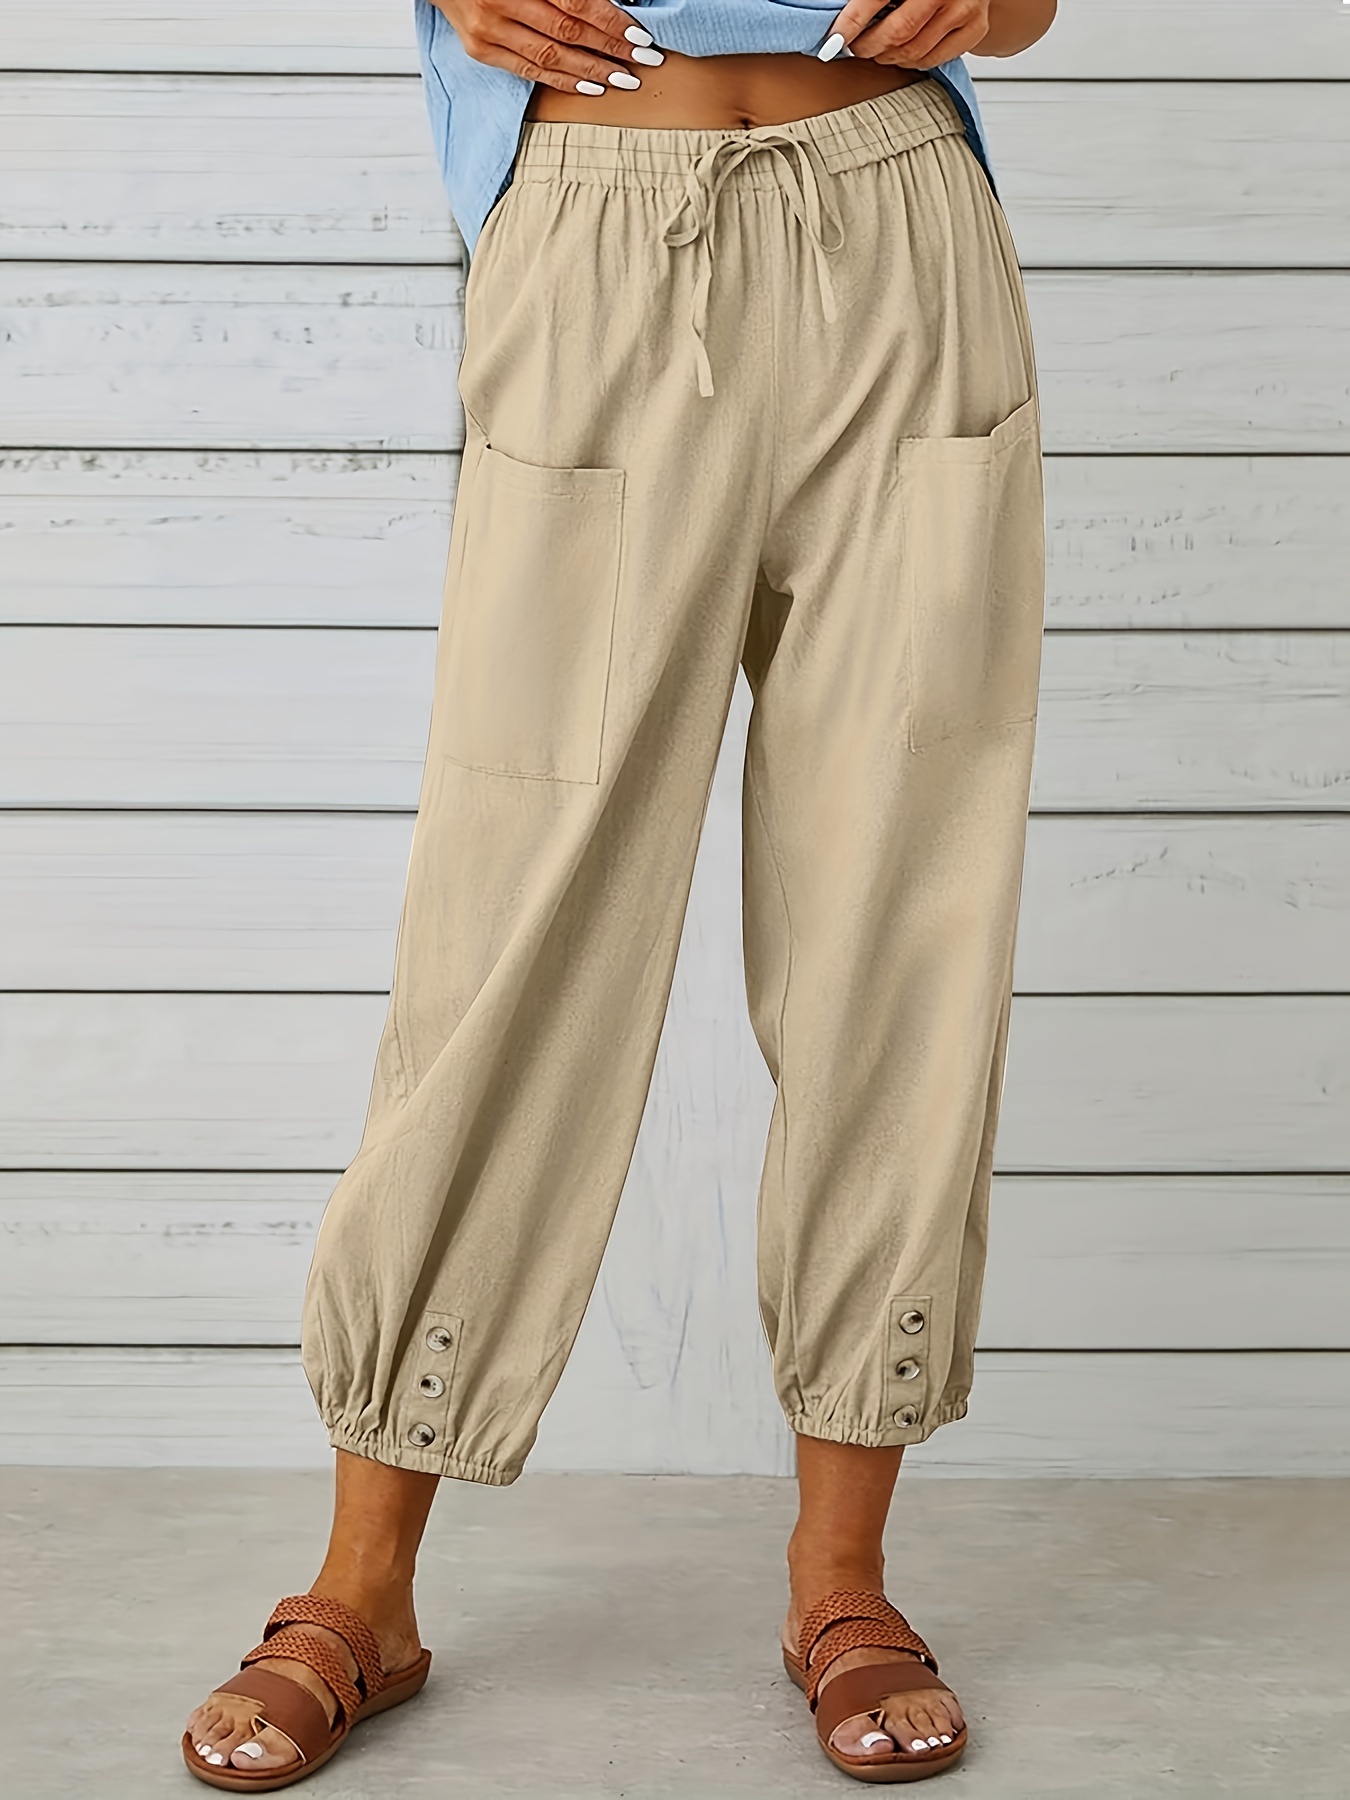 Wide Leg Capri Pants for Women Casual Summer Drawstring Elastic High Waist  Cotton Linen Pant Cropped Trousers